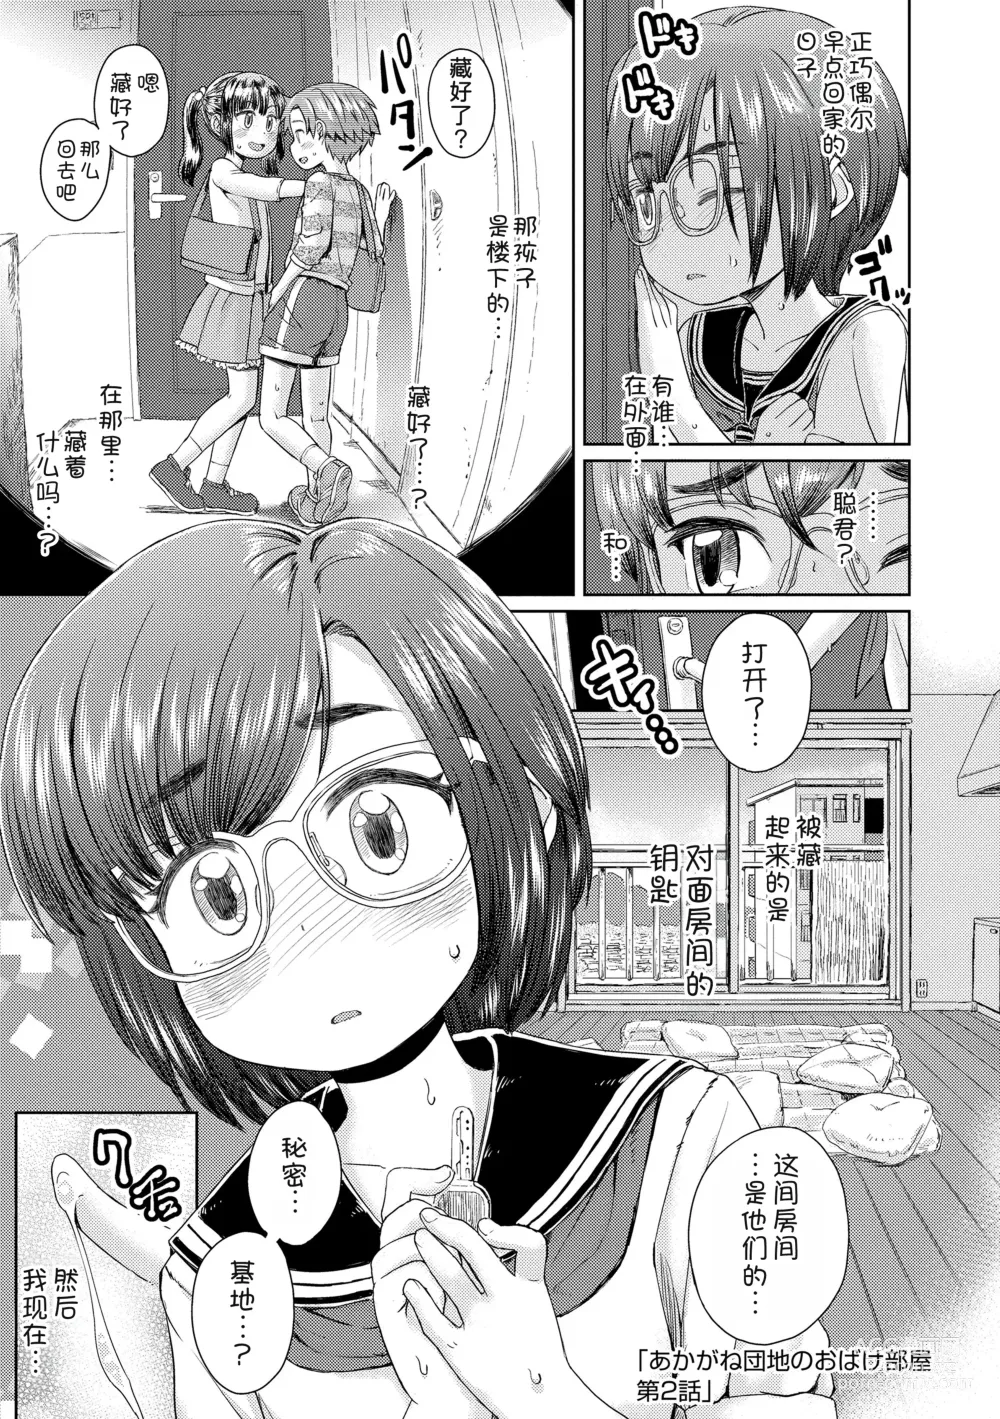 Page 2 of manga Akagane Danchi no Obake Heya Ch. 2